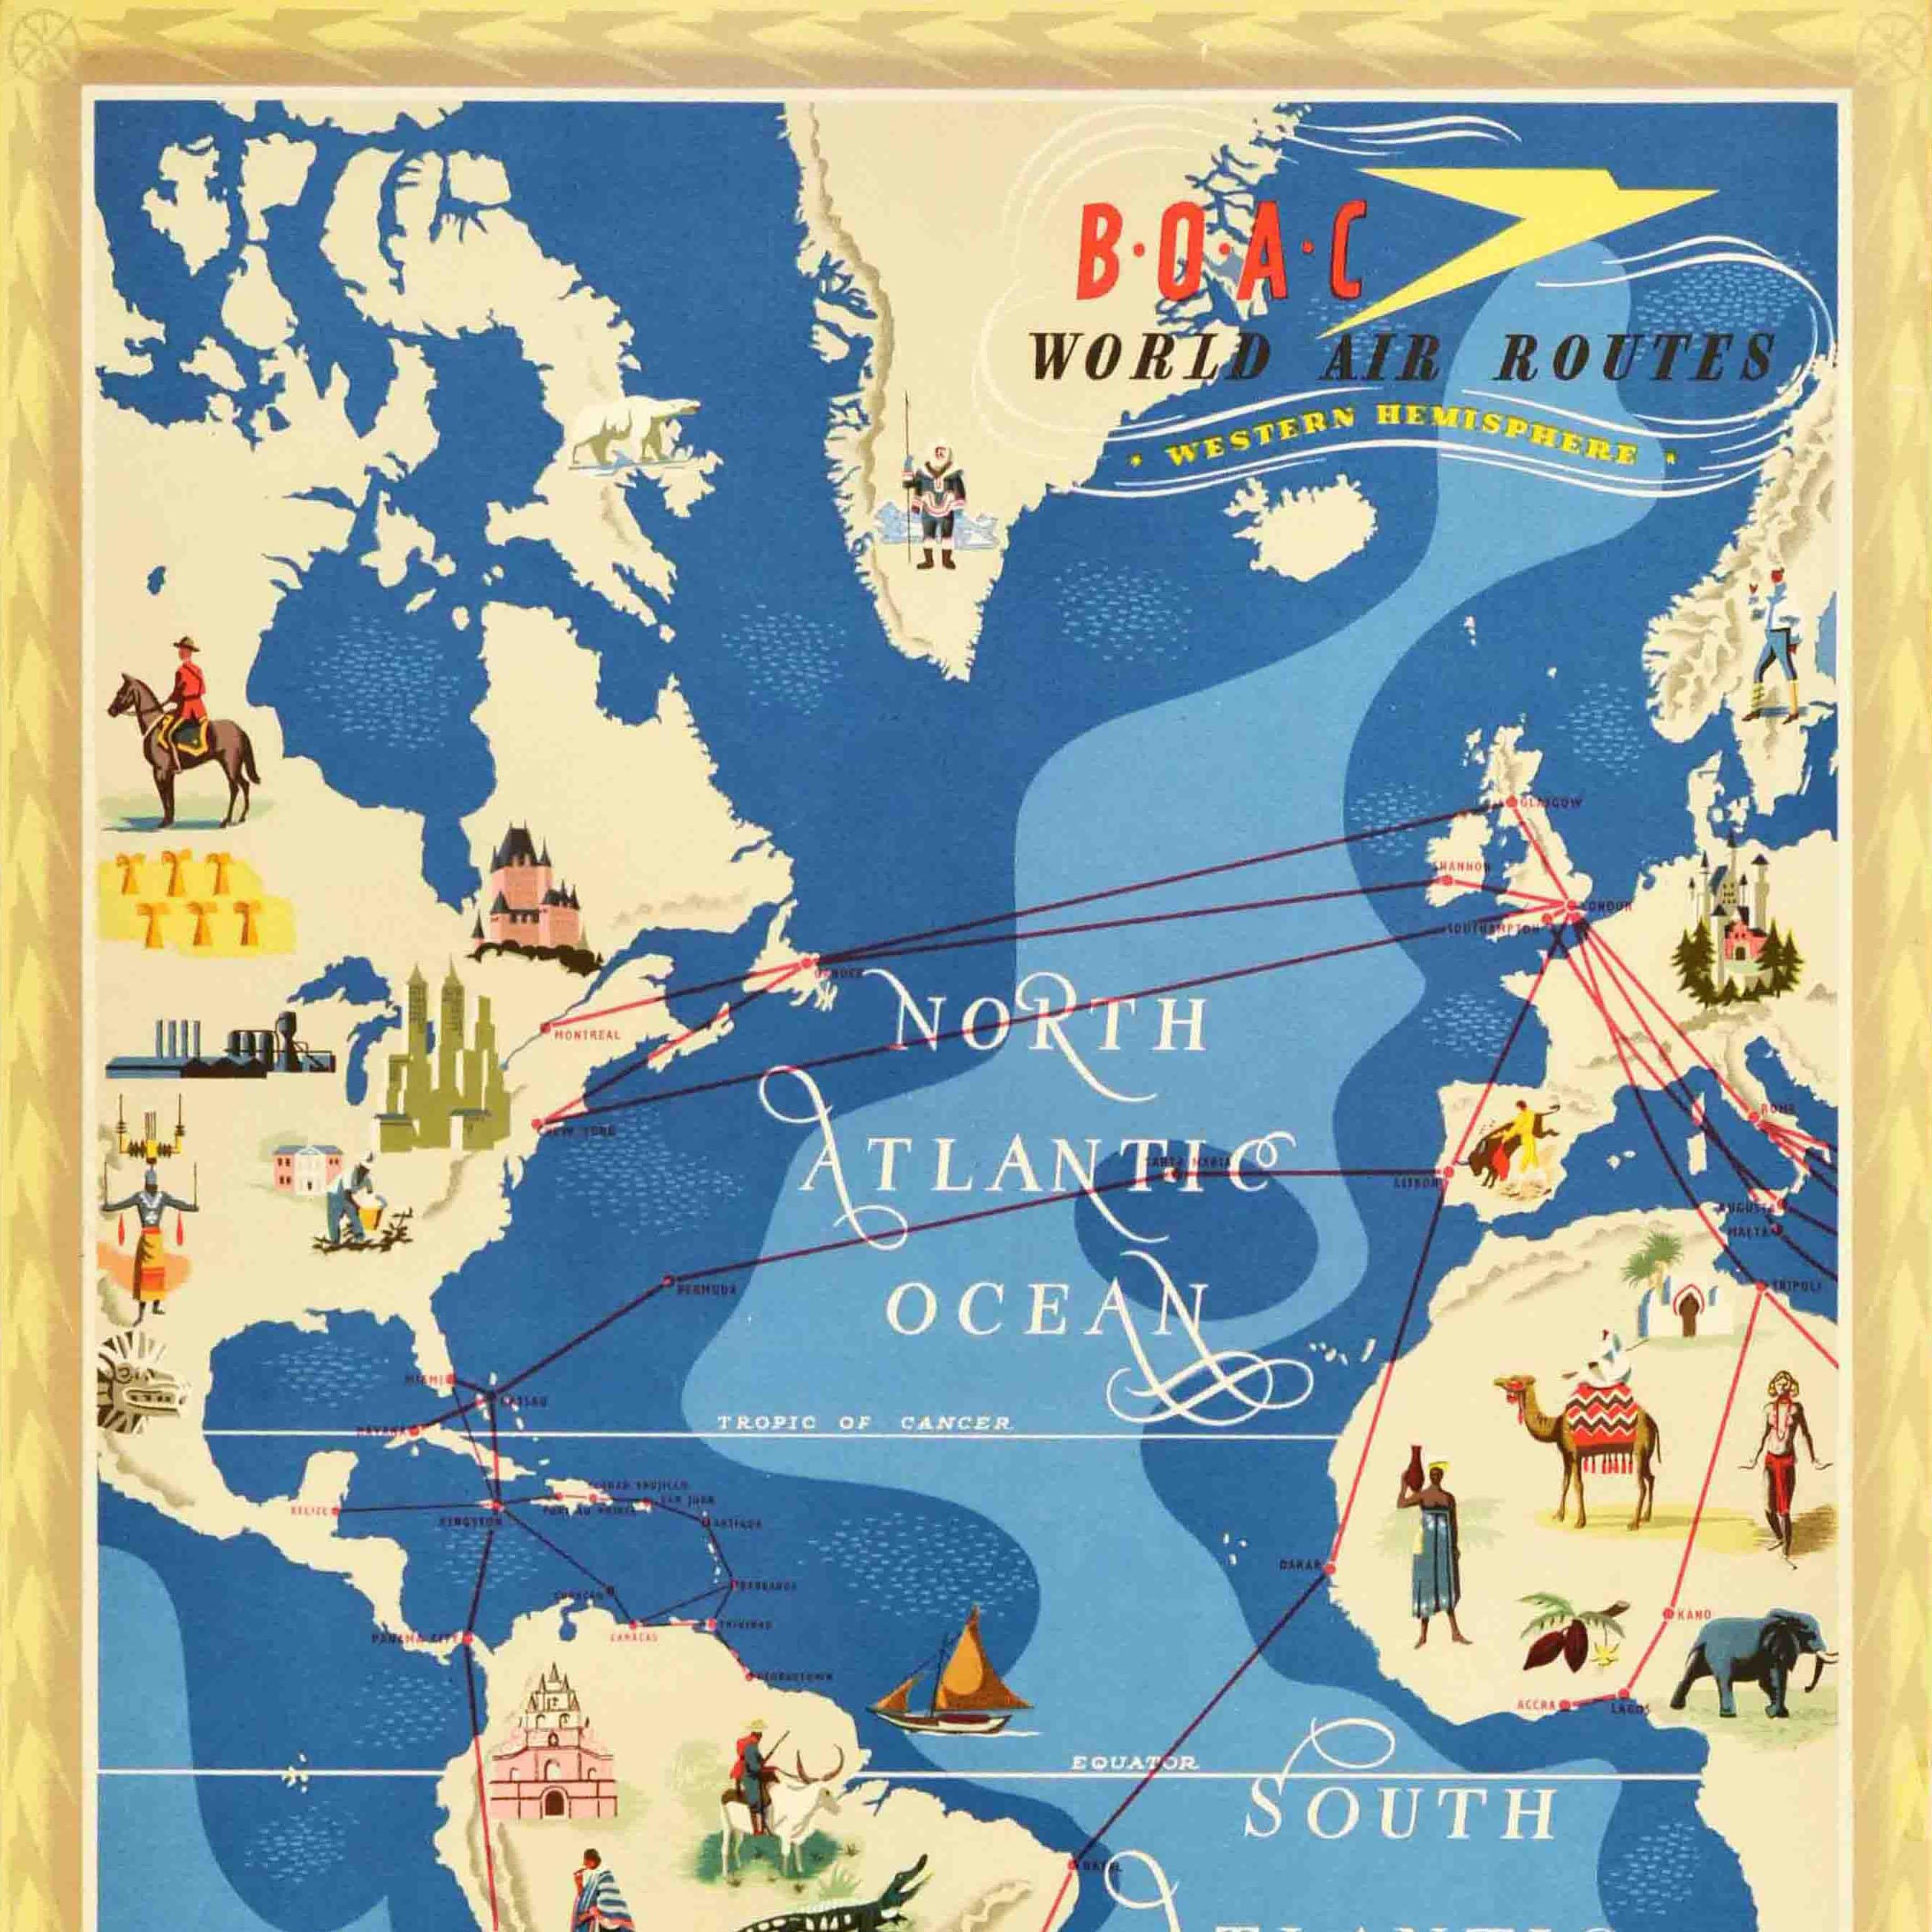 British Original Vintage Travel Poster BOAC World Air Routes Western Hemisphere Design For Sale